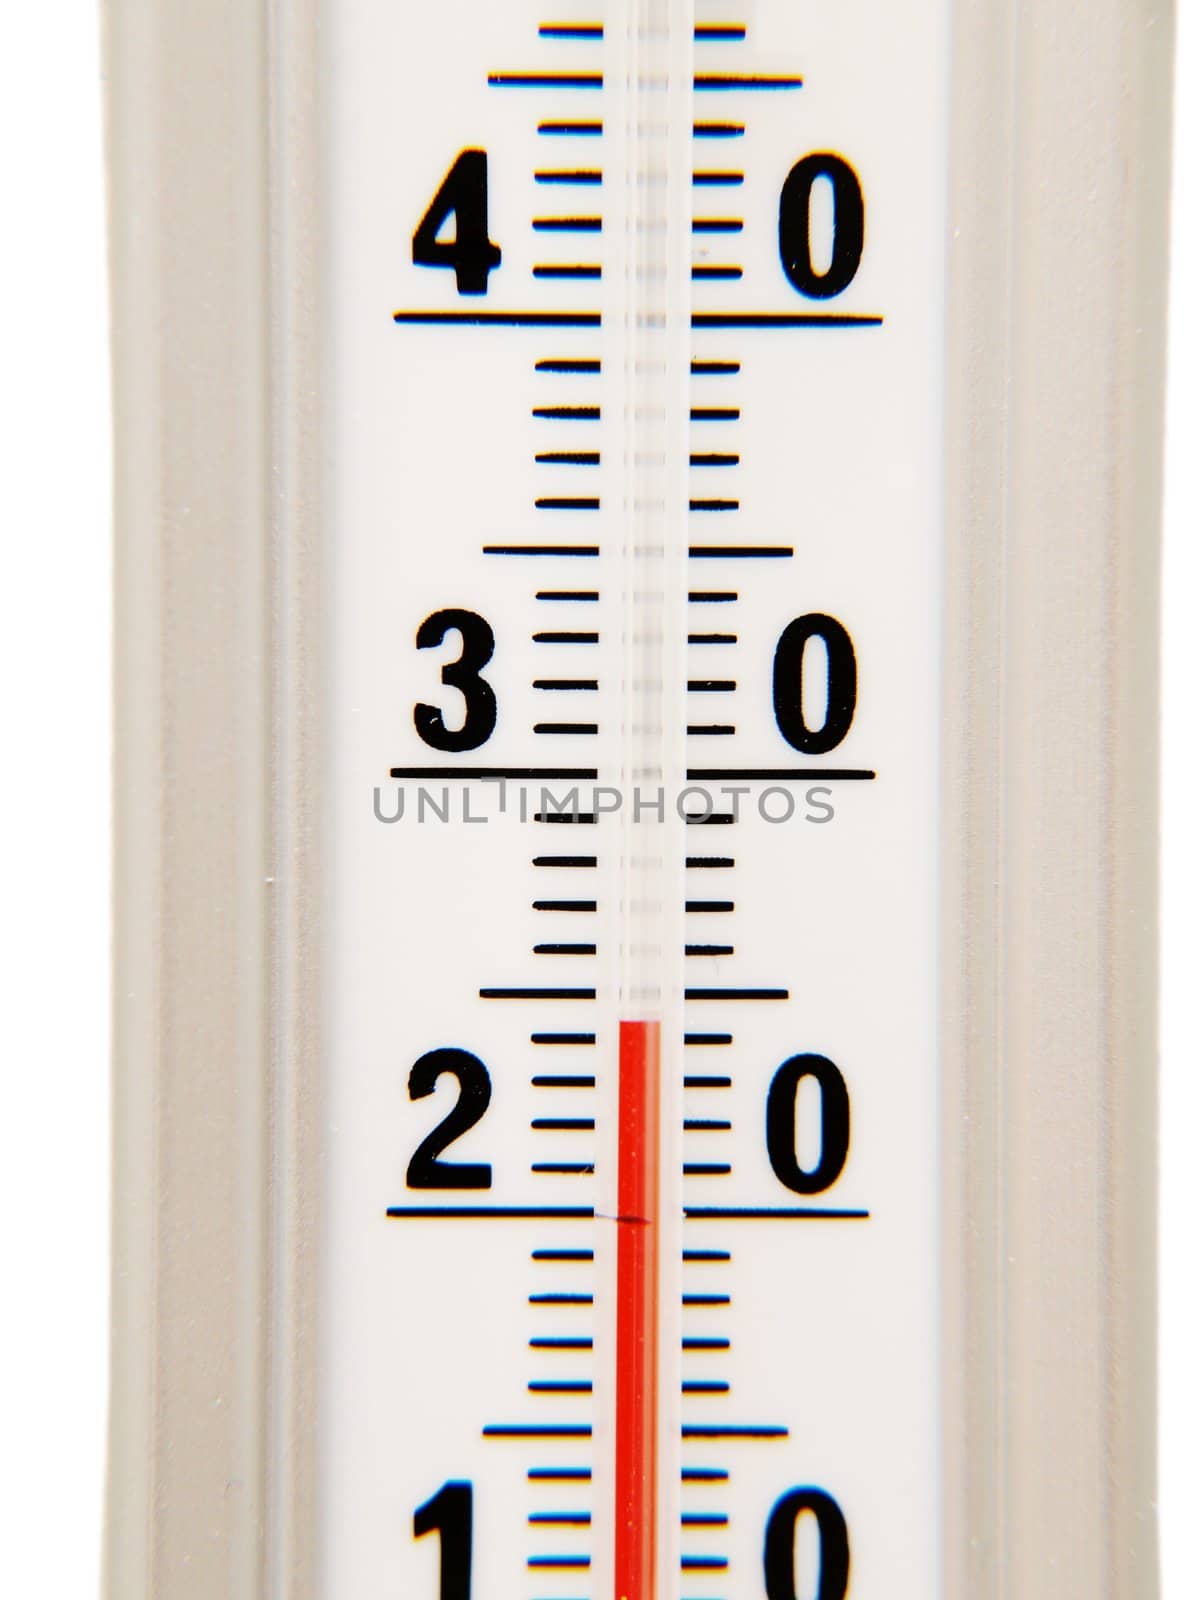 Temperature instrument, celcius degrees, with red alcohol